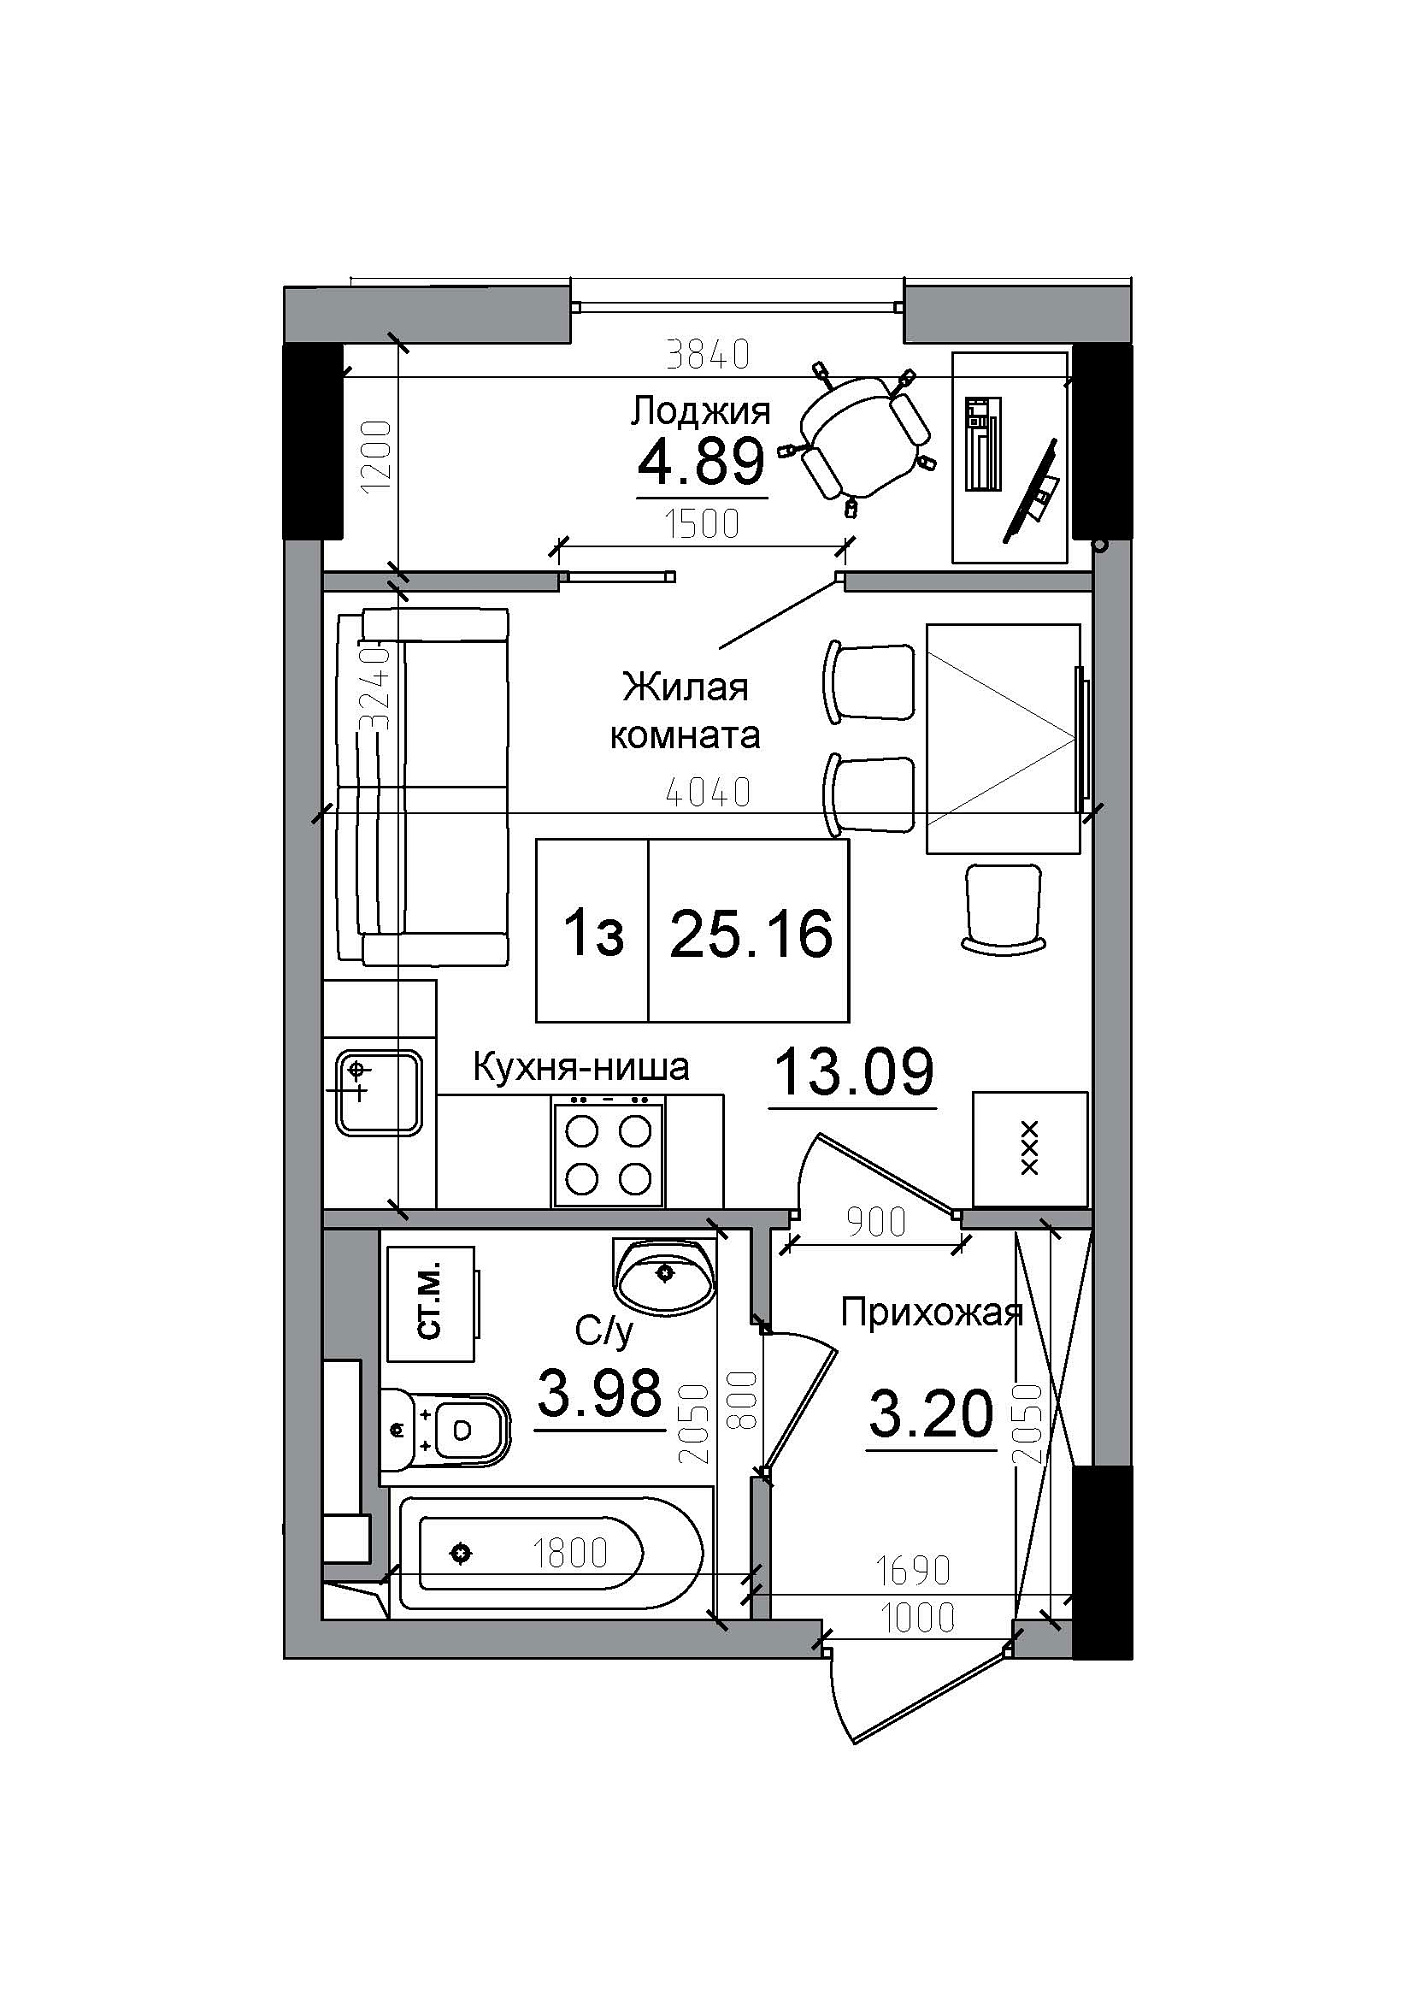 Планировка Smart-квартира площей 25.16м2, AB-12-12/00009.